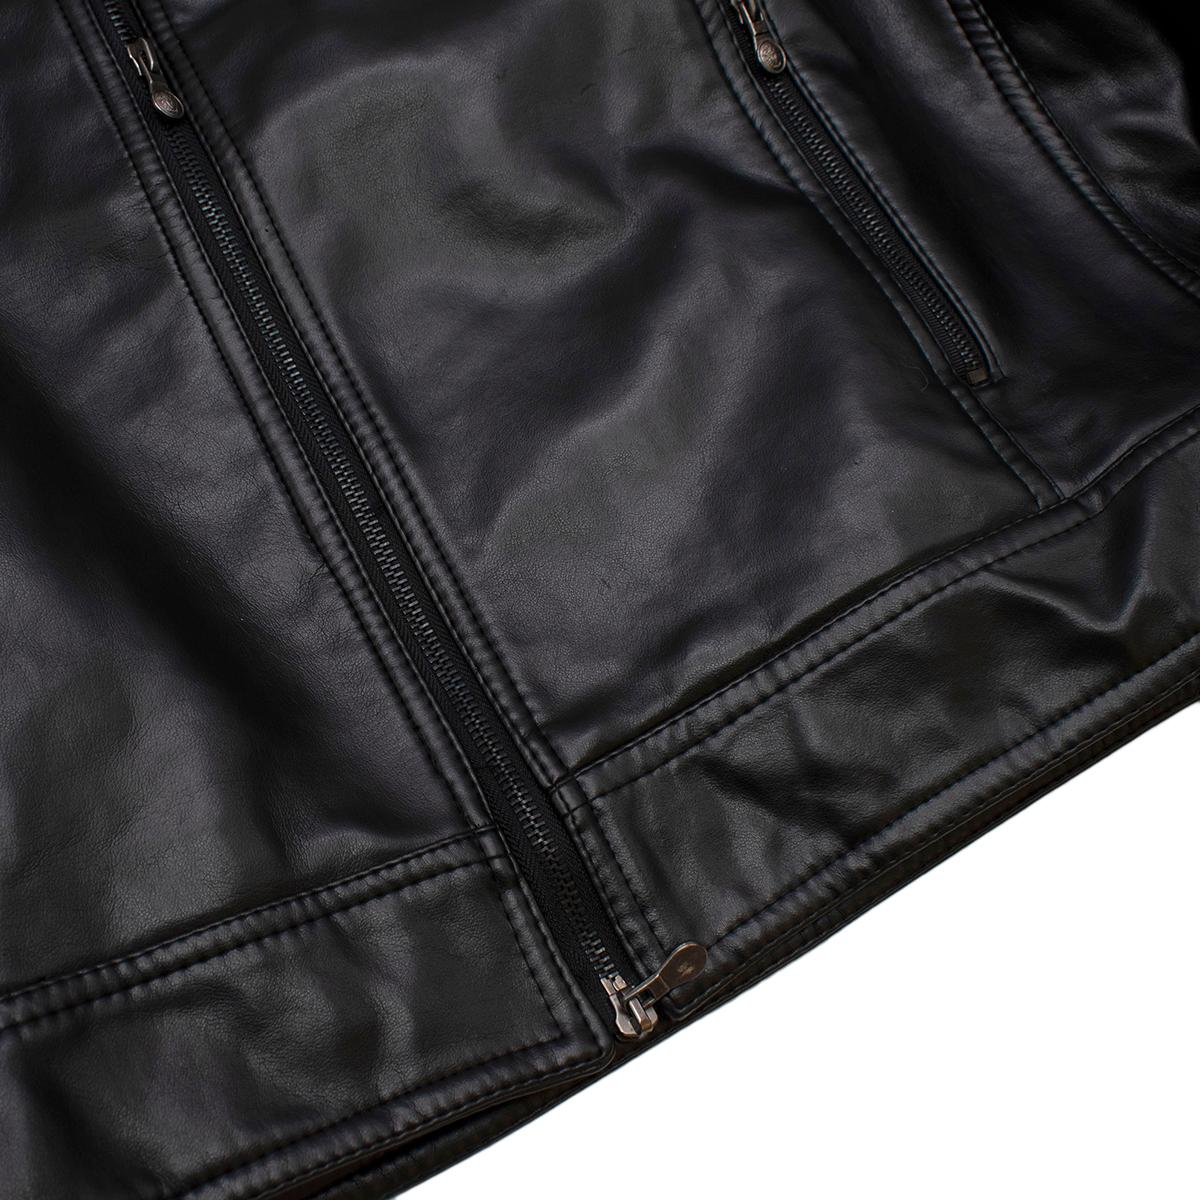 Men's Gianni Versace Vintage Leather Biker Jacket - Us size 44 For Sale